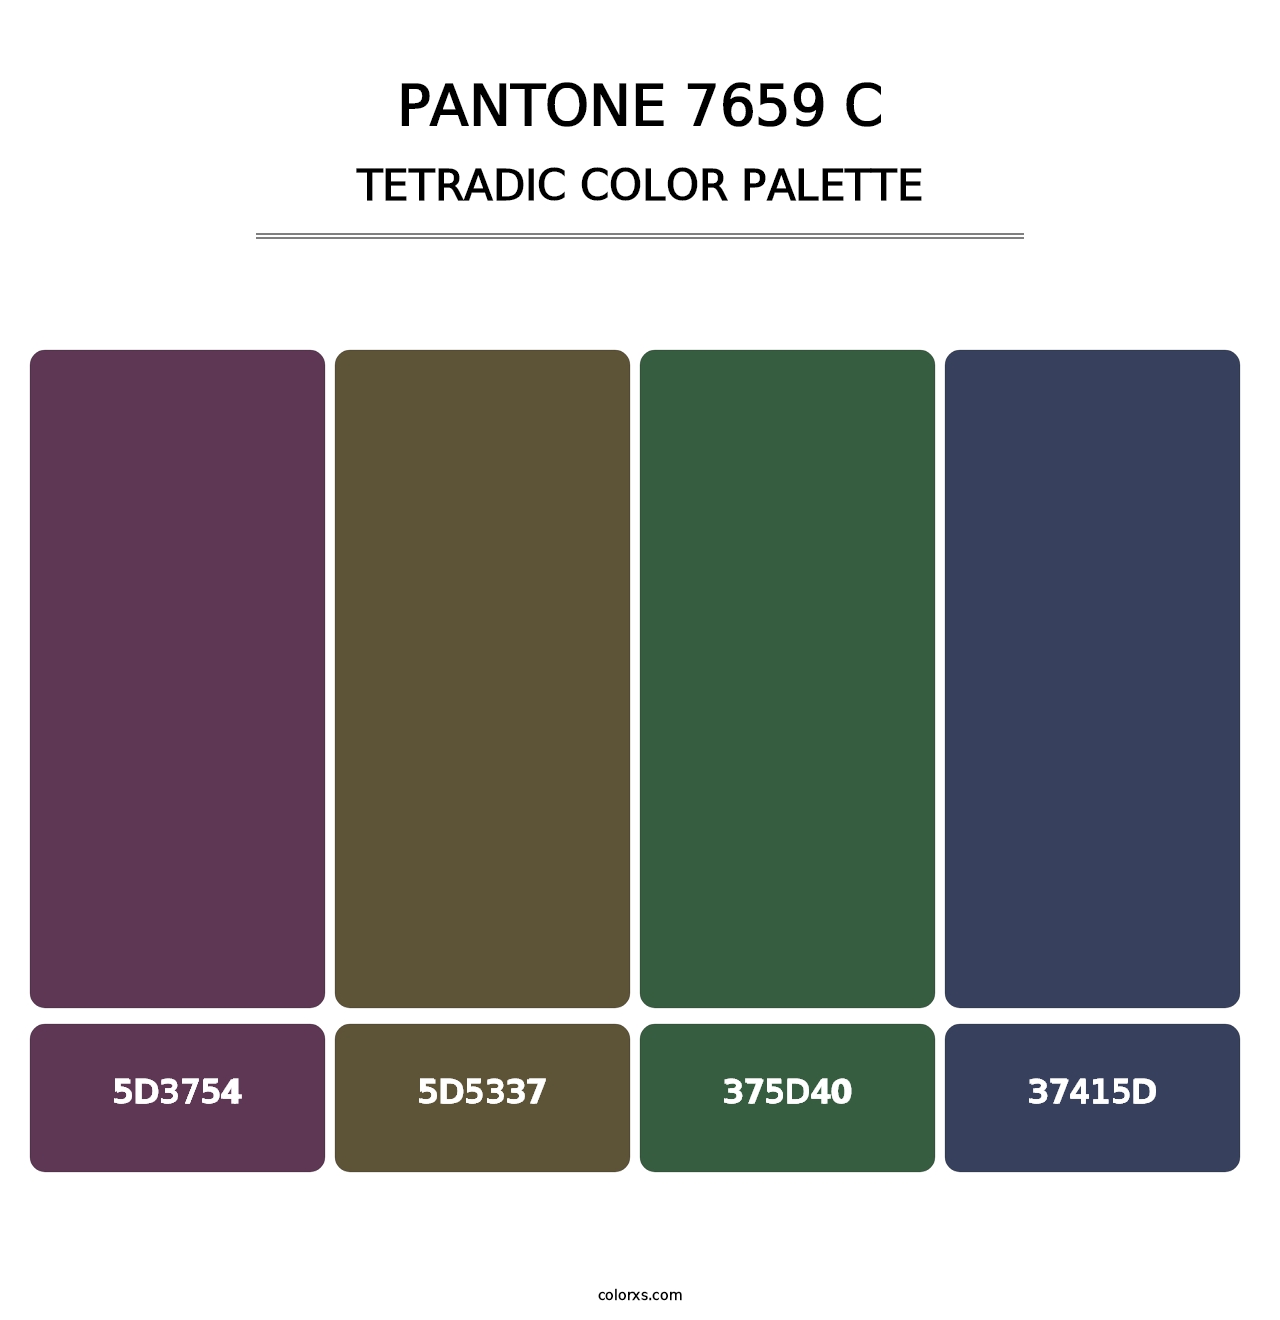 PANTONE 7659 C - Tetradic Color Palette